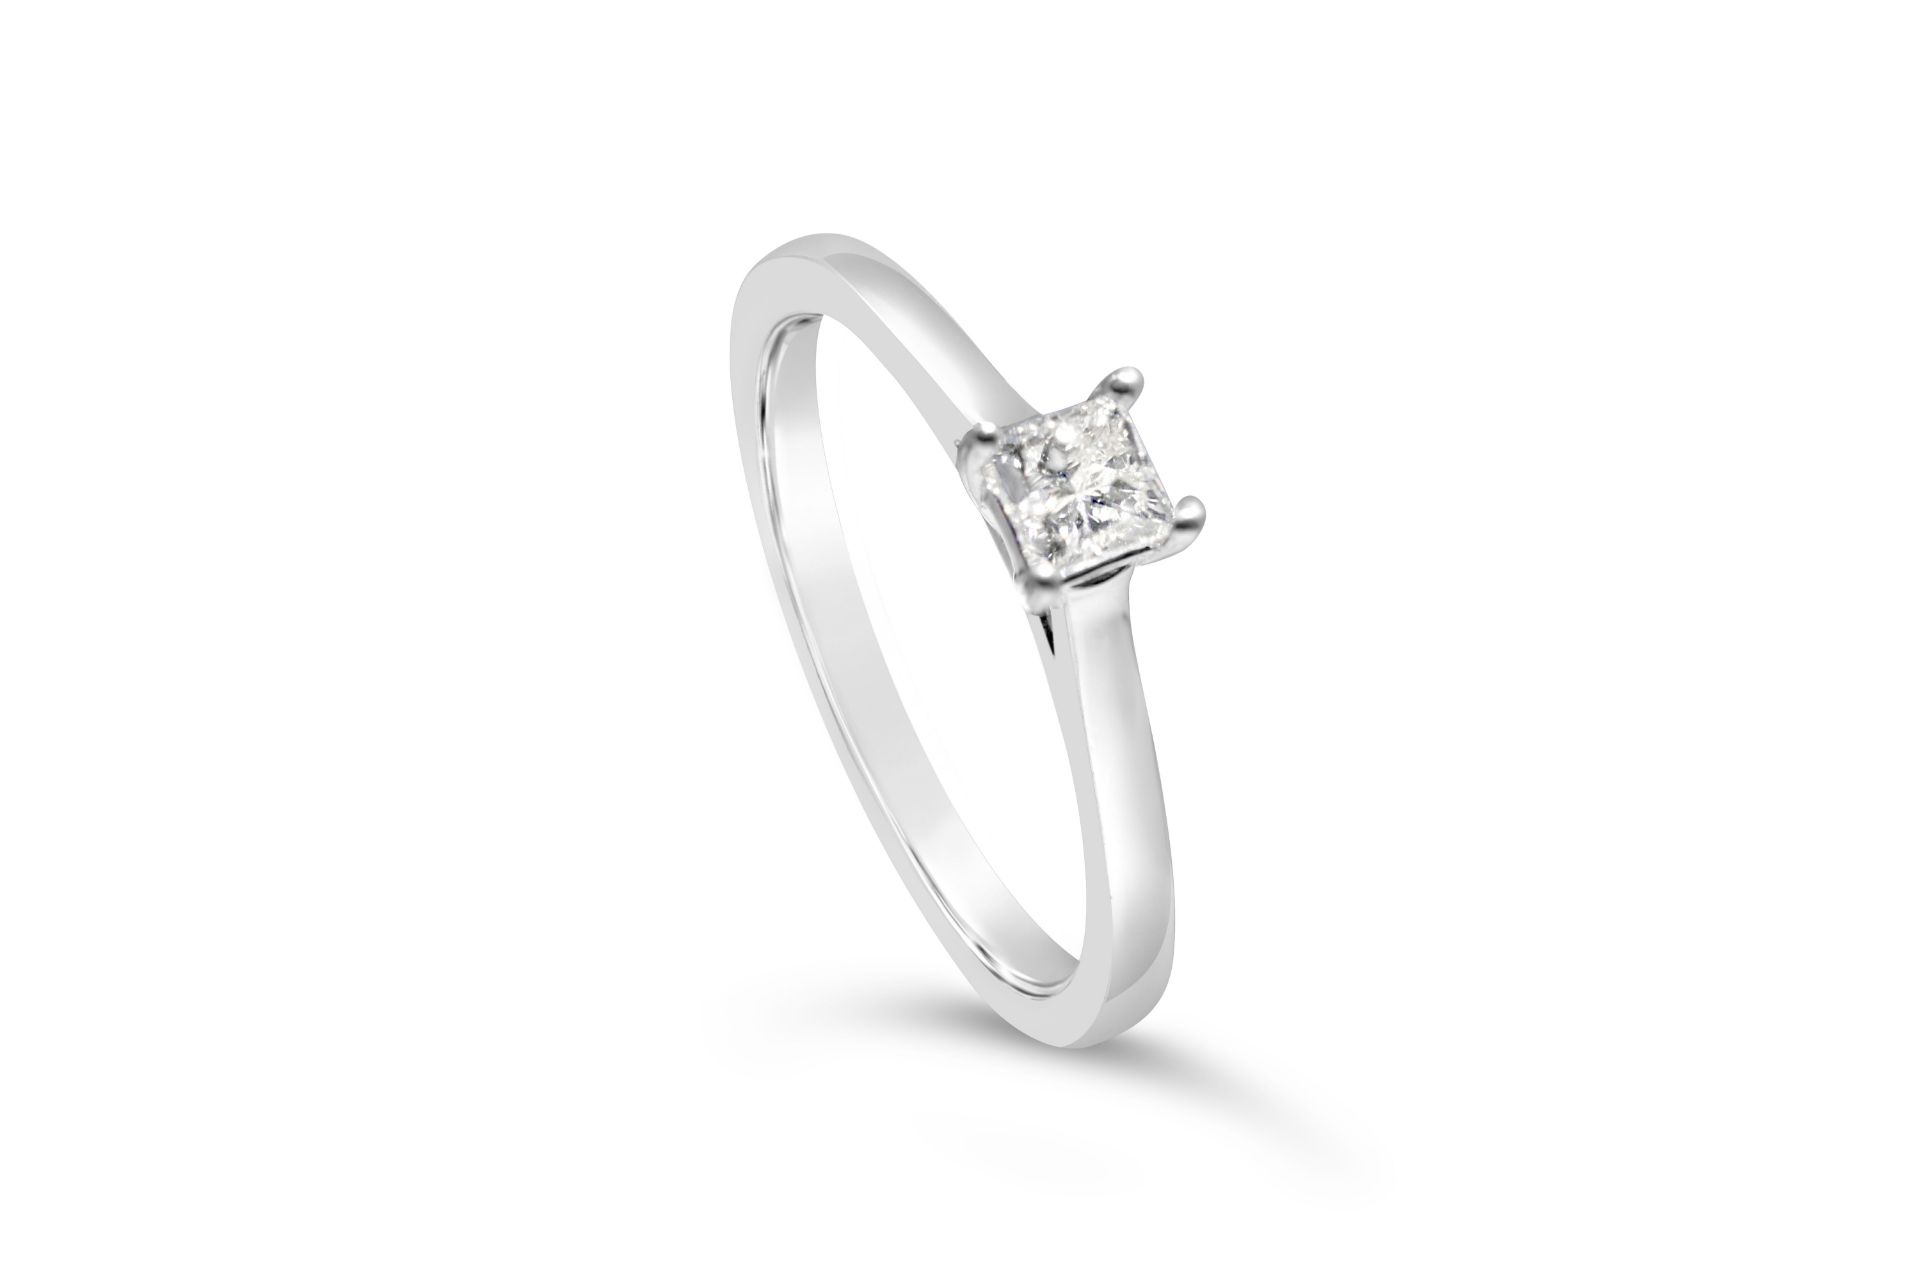 Premium Quality Princess Cut Solitaire Diamond Ring, Metal 9ct White Gold, Weight 2.15, Diamond